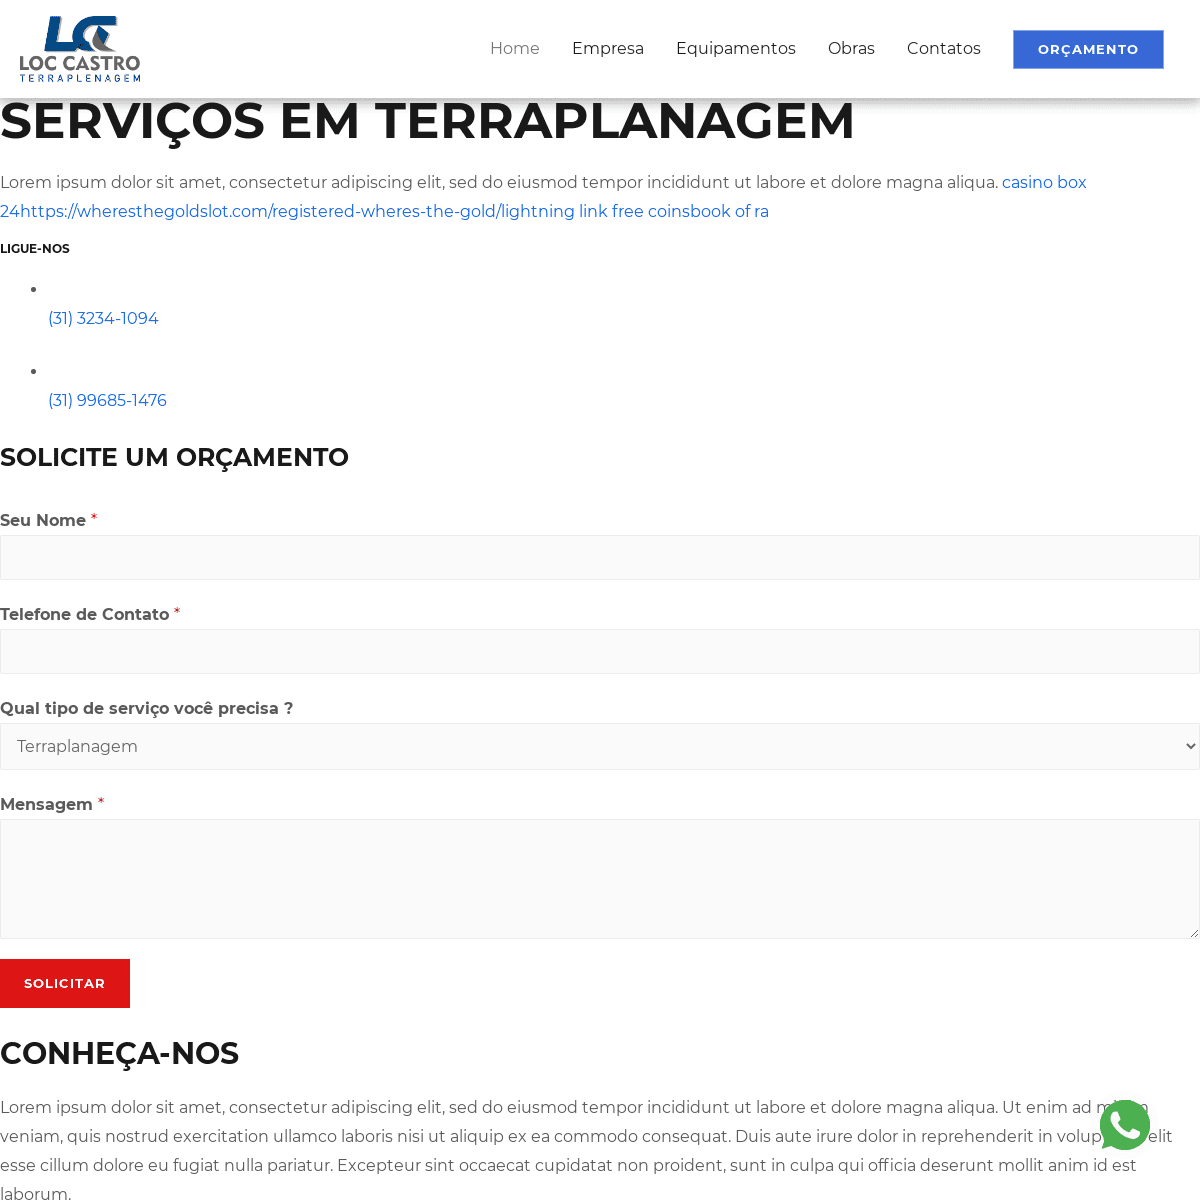 A complete backup of https://loccastro.com.br